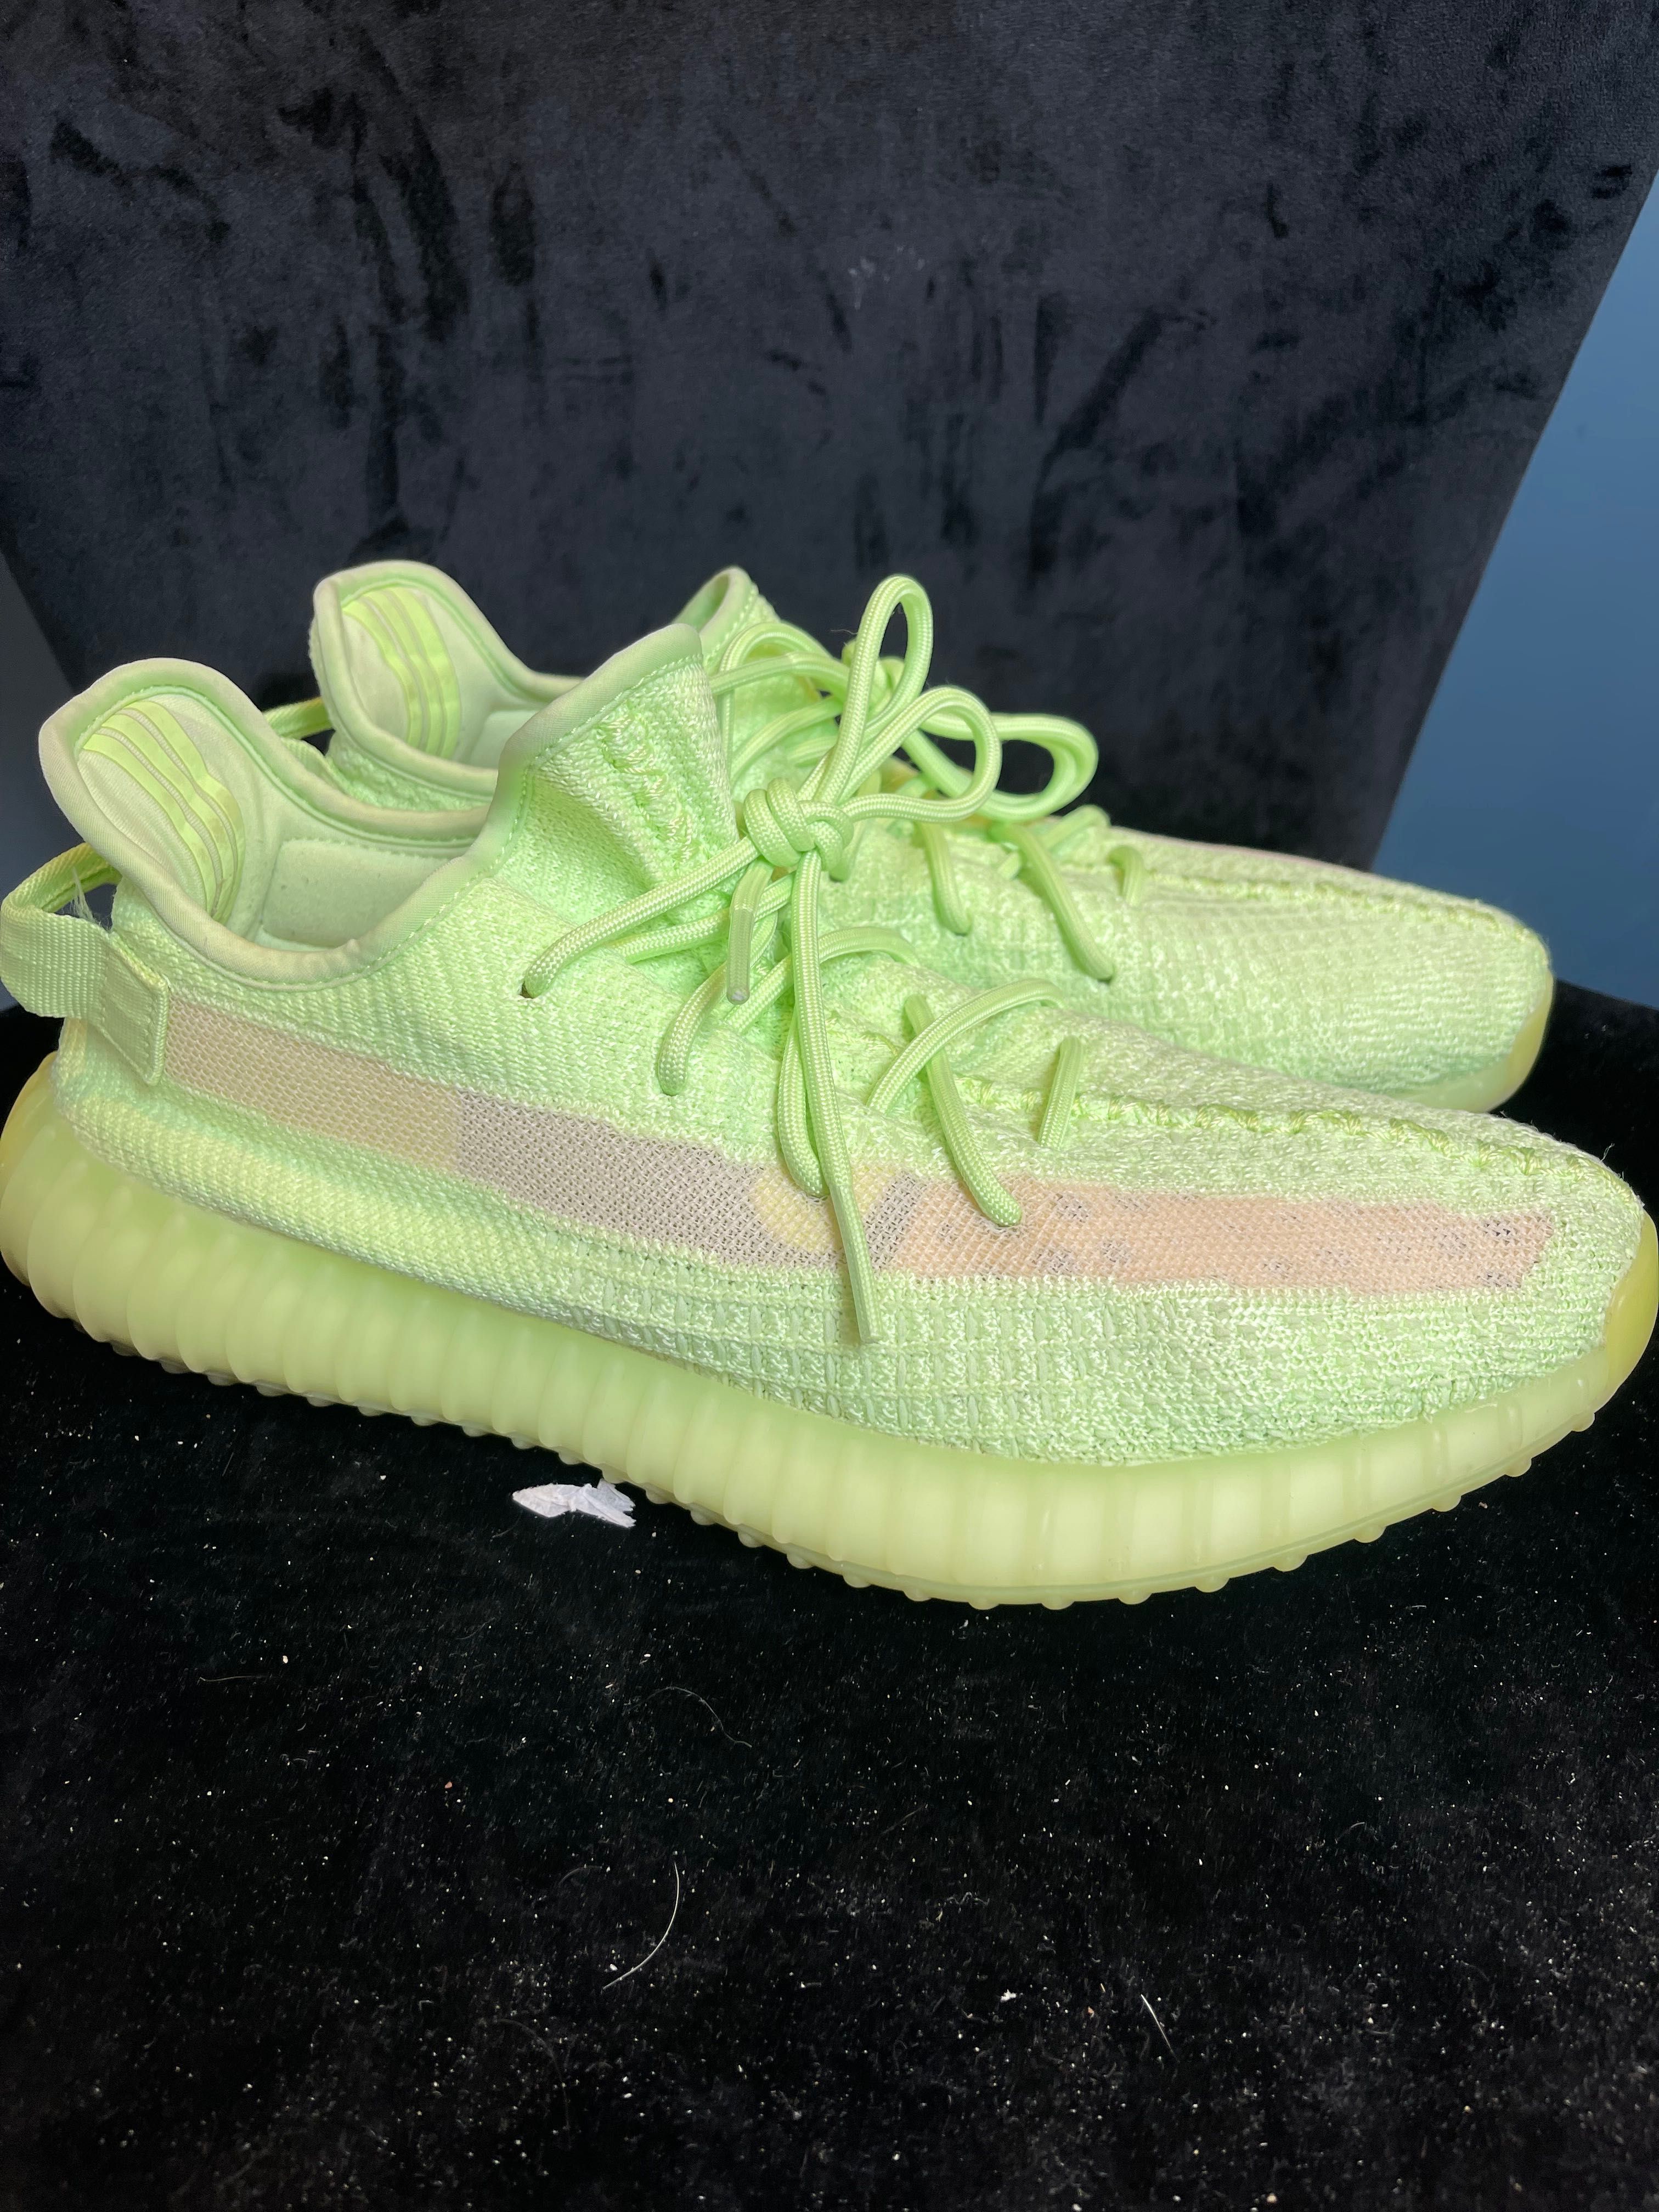 adidas yeezy boost 350 v2 Glow gui 44 2/3 green white